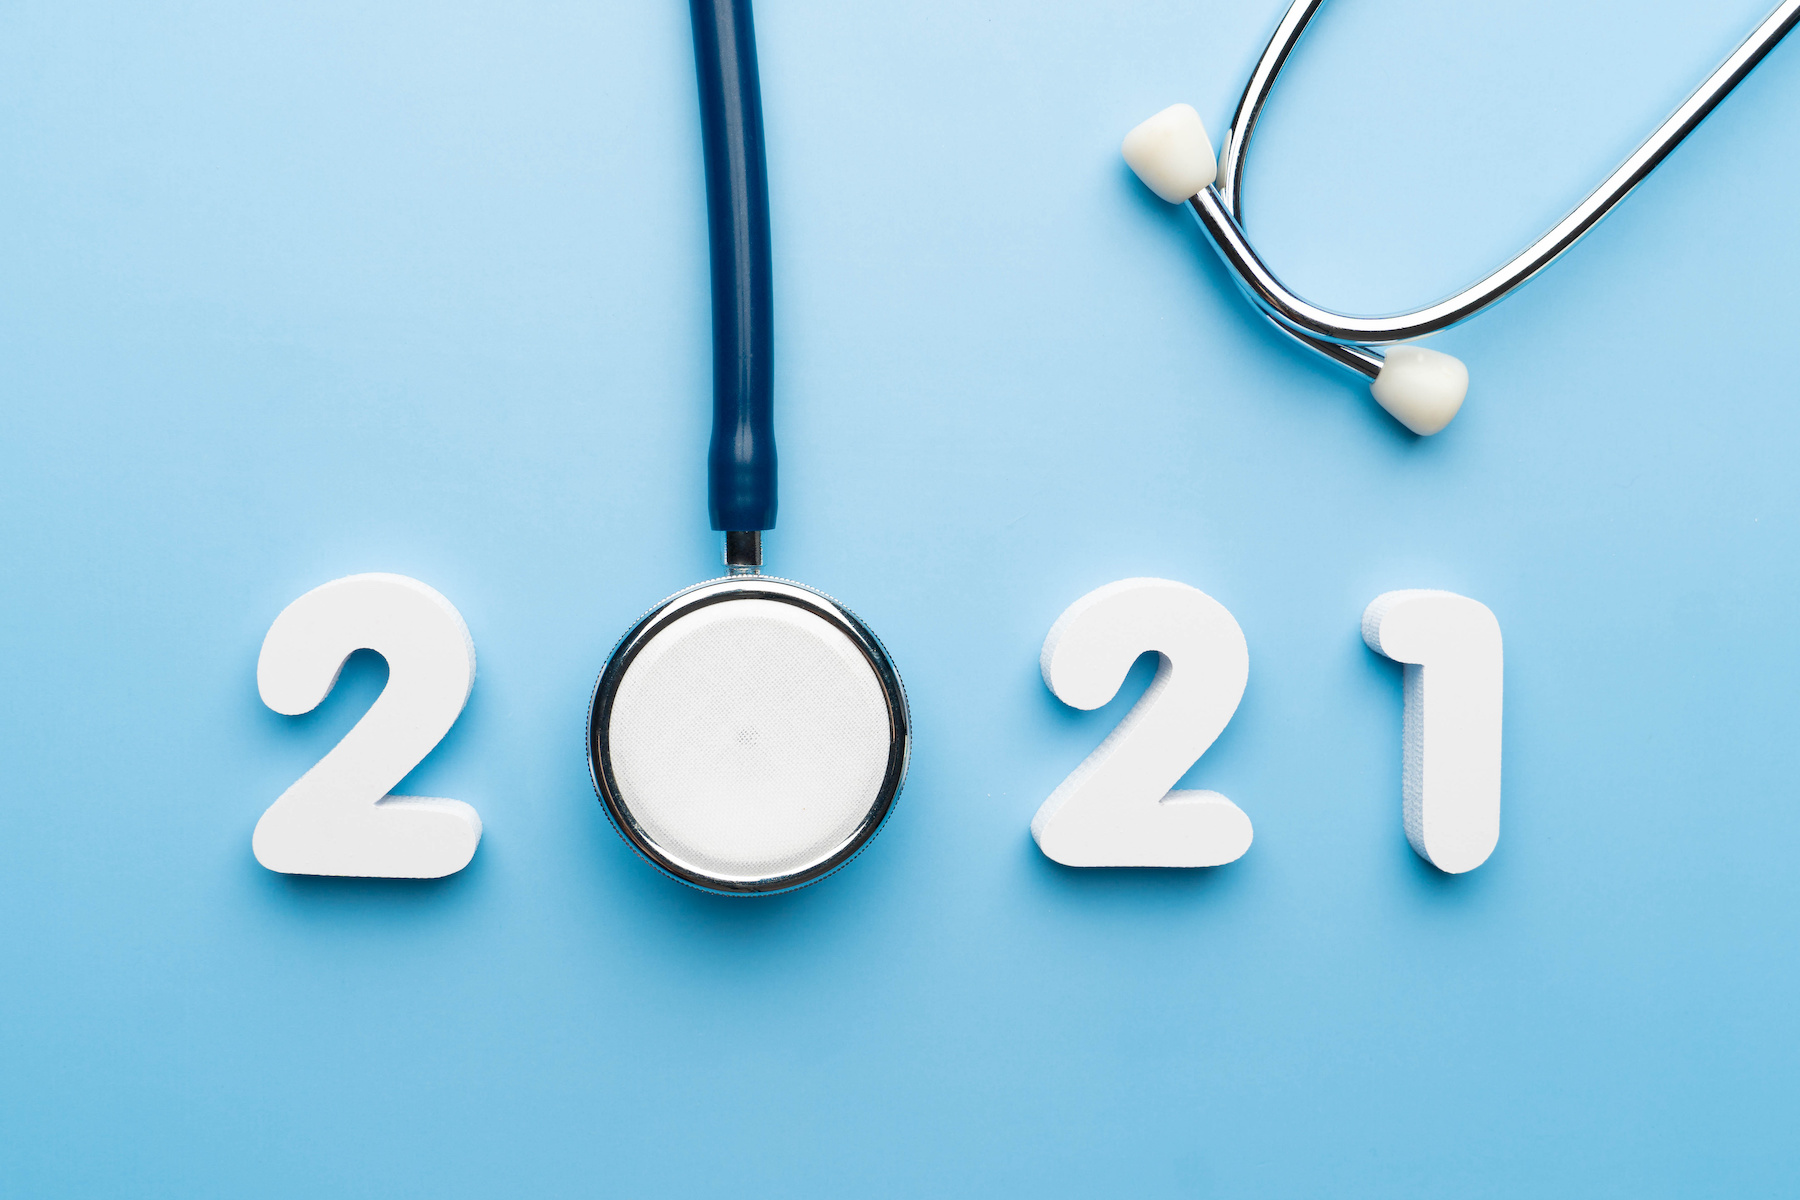 2021 healthcare trends